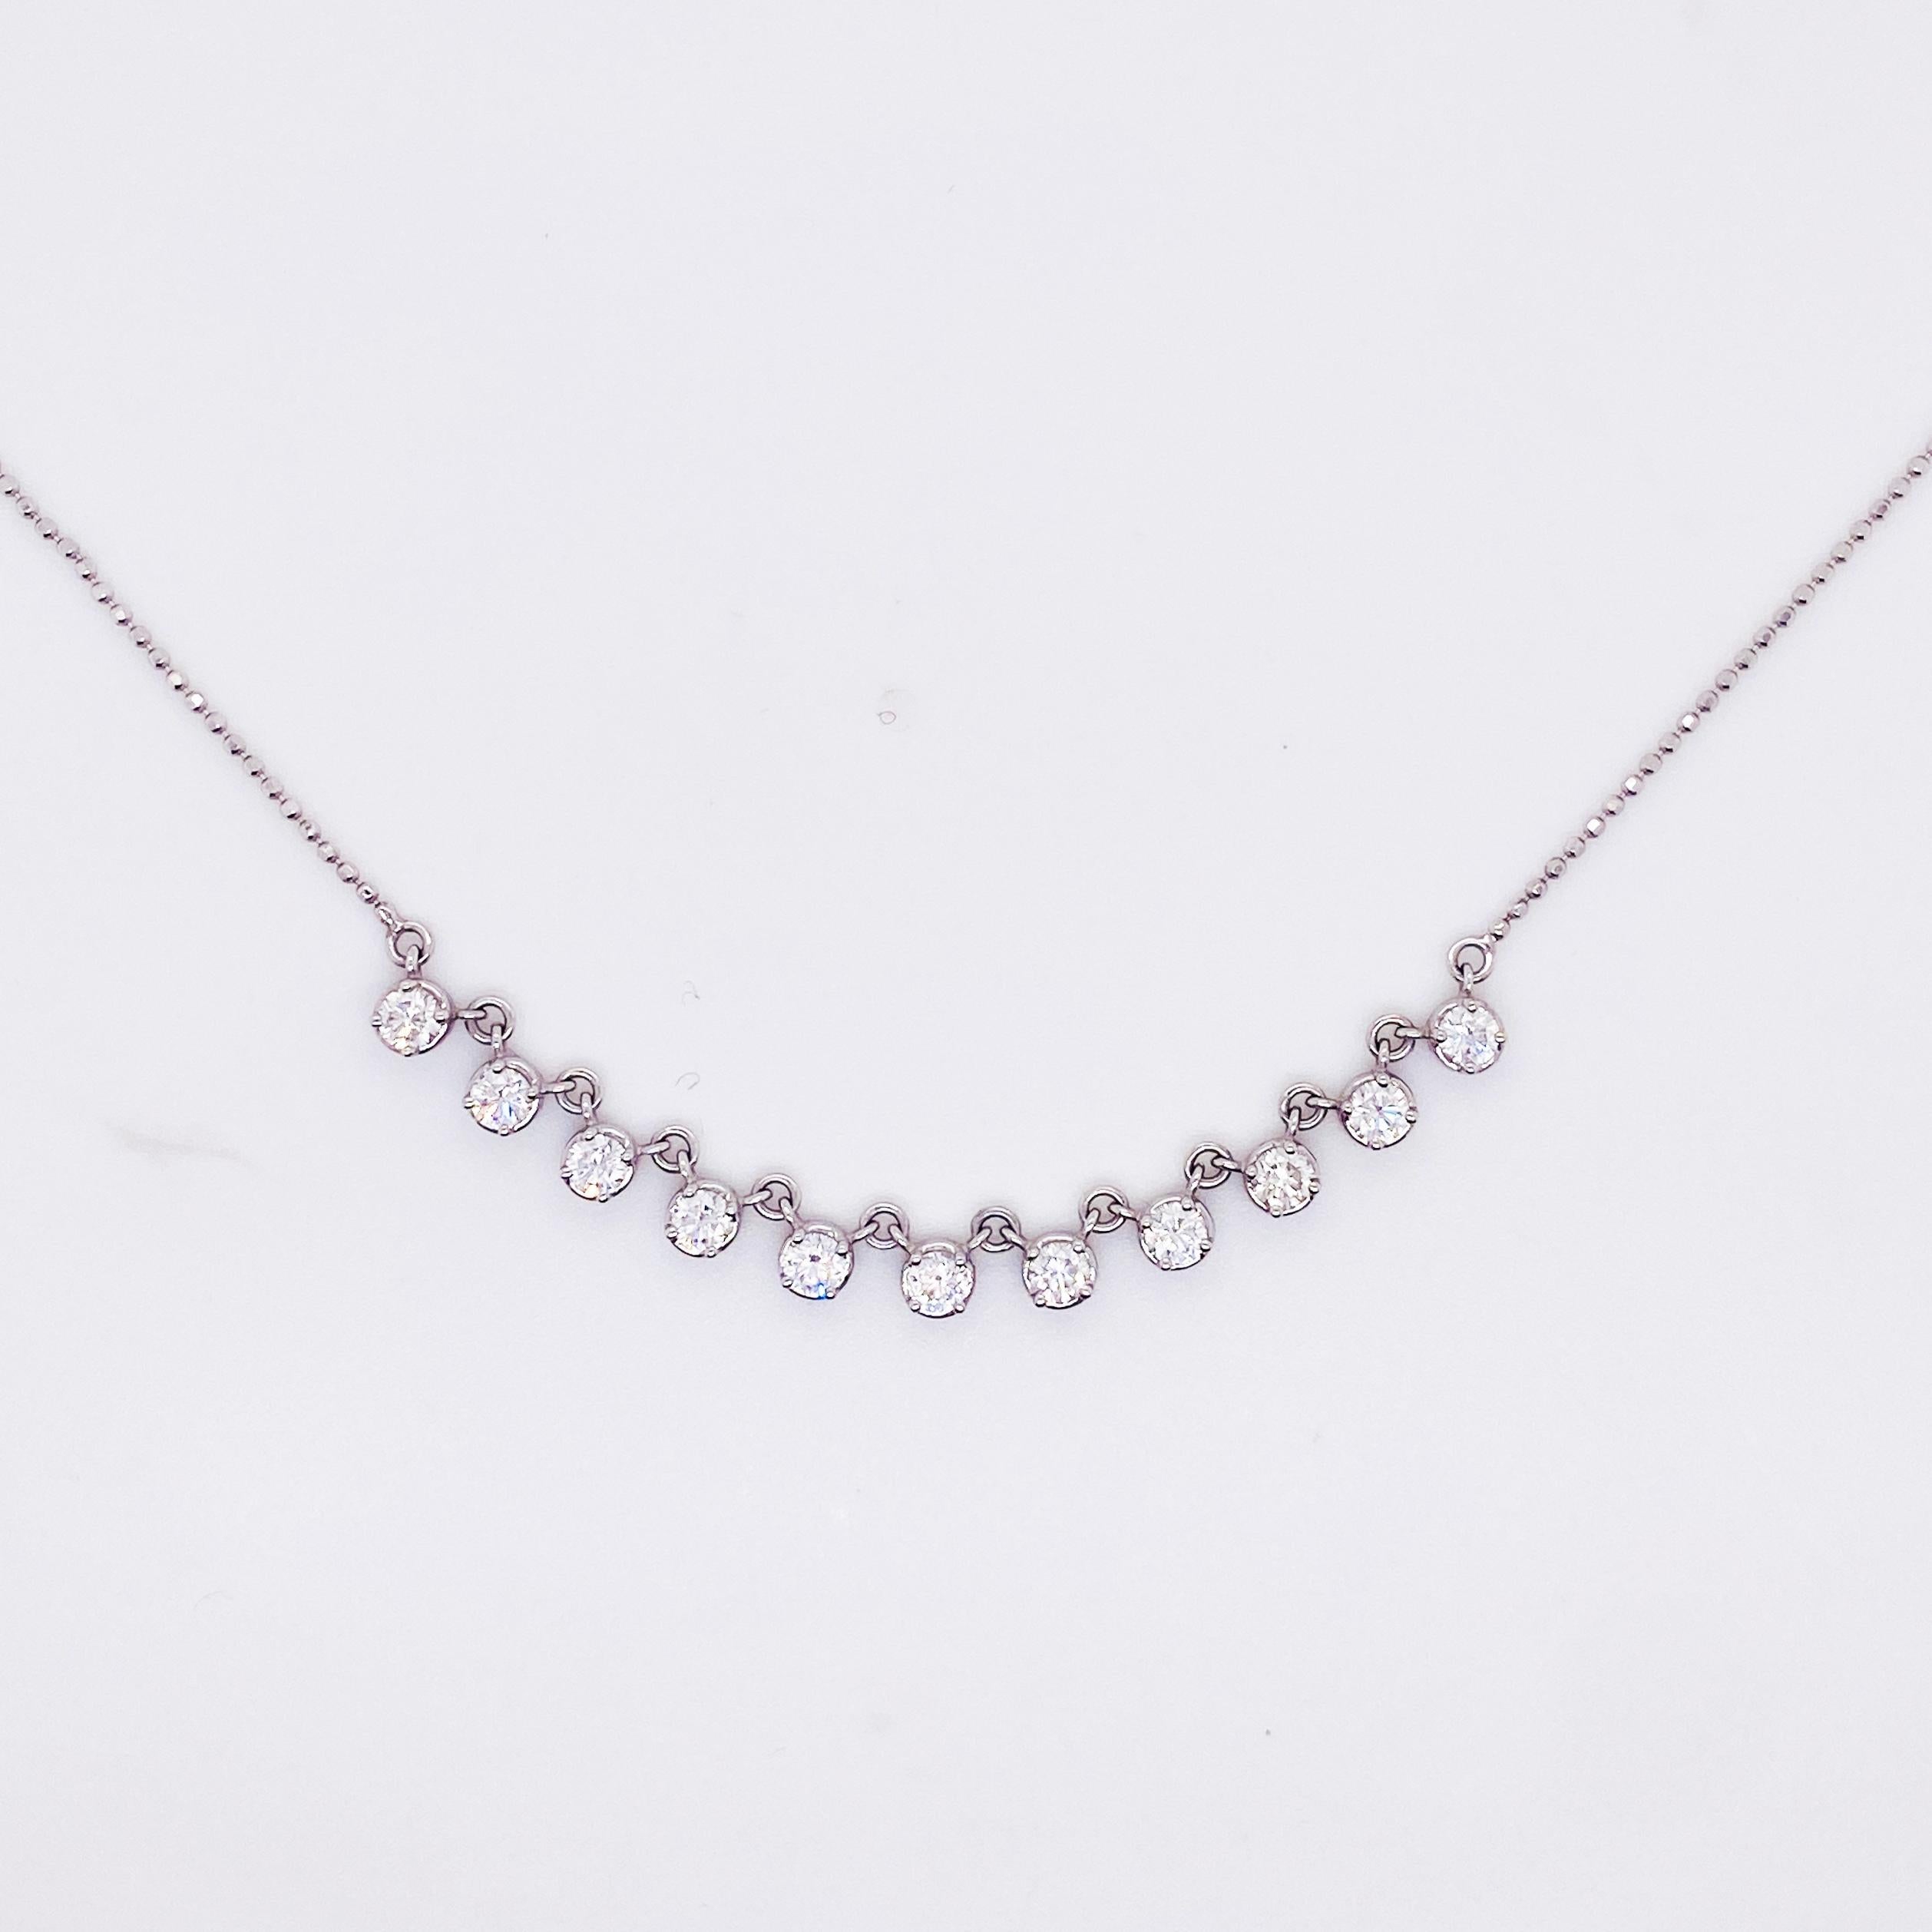 modern diamond necklace designs